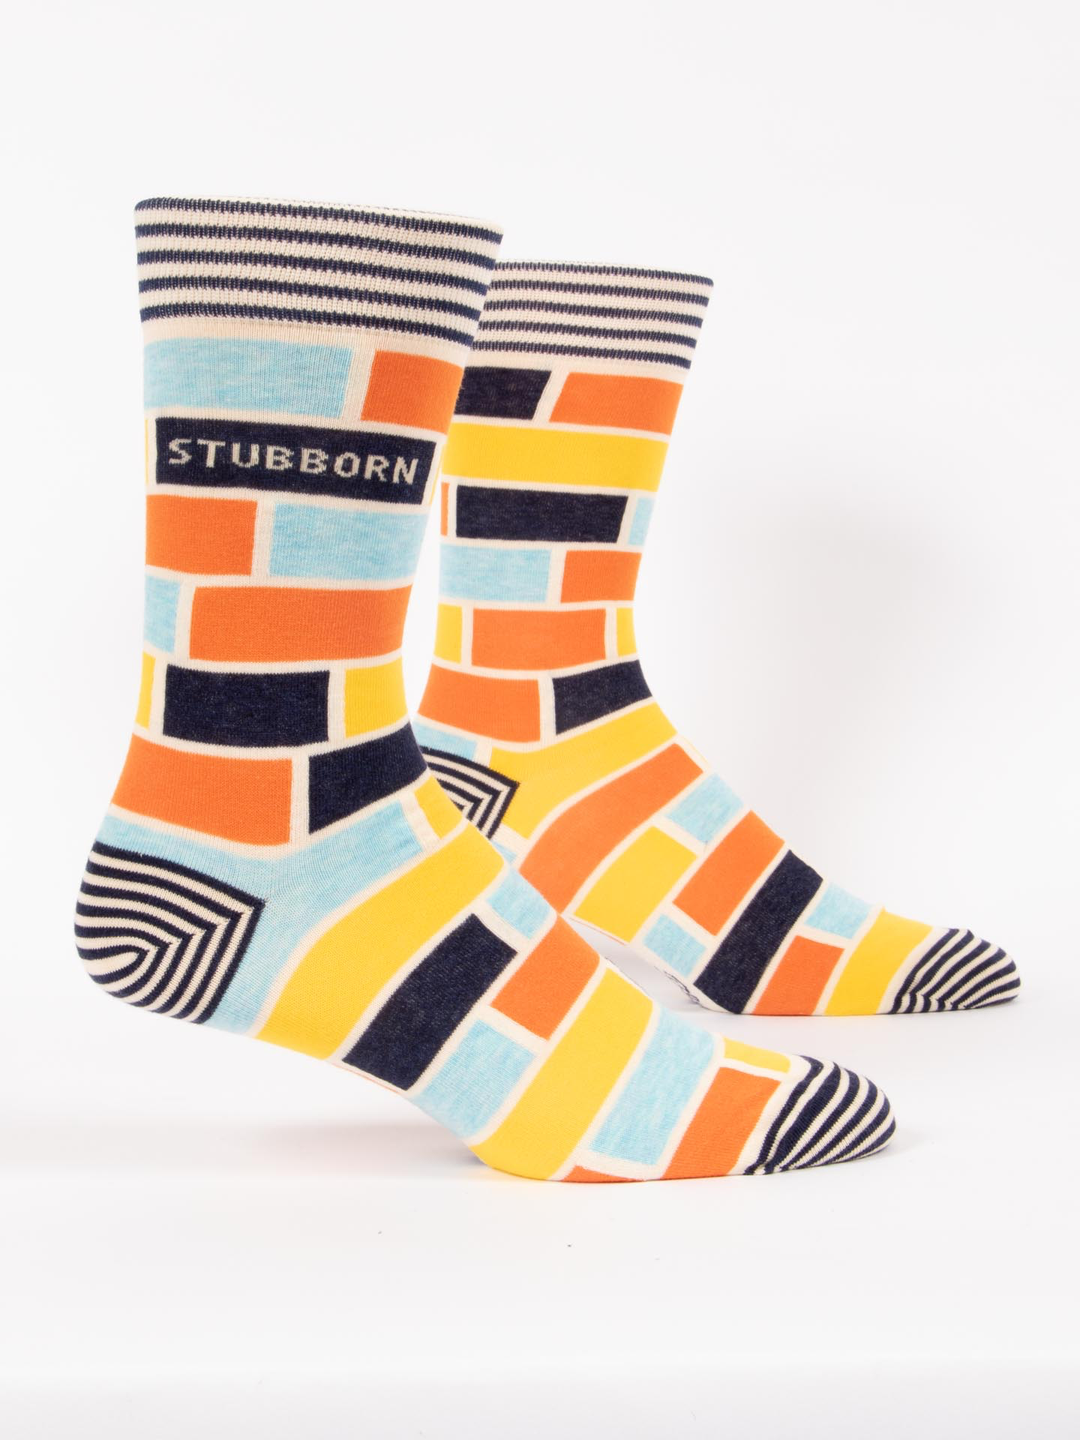 Stubborn Men's Crew Socks - Kingfisher Road - Online Boutique